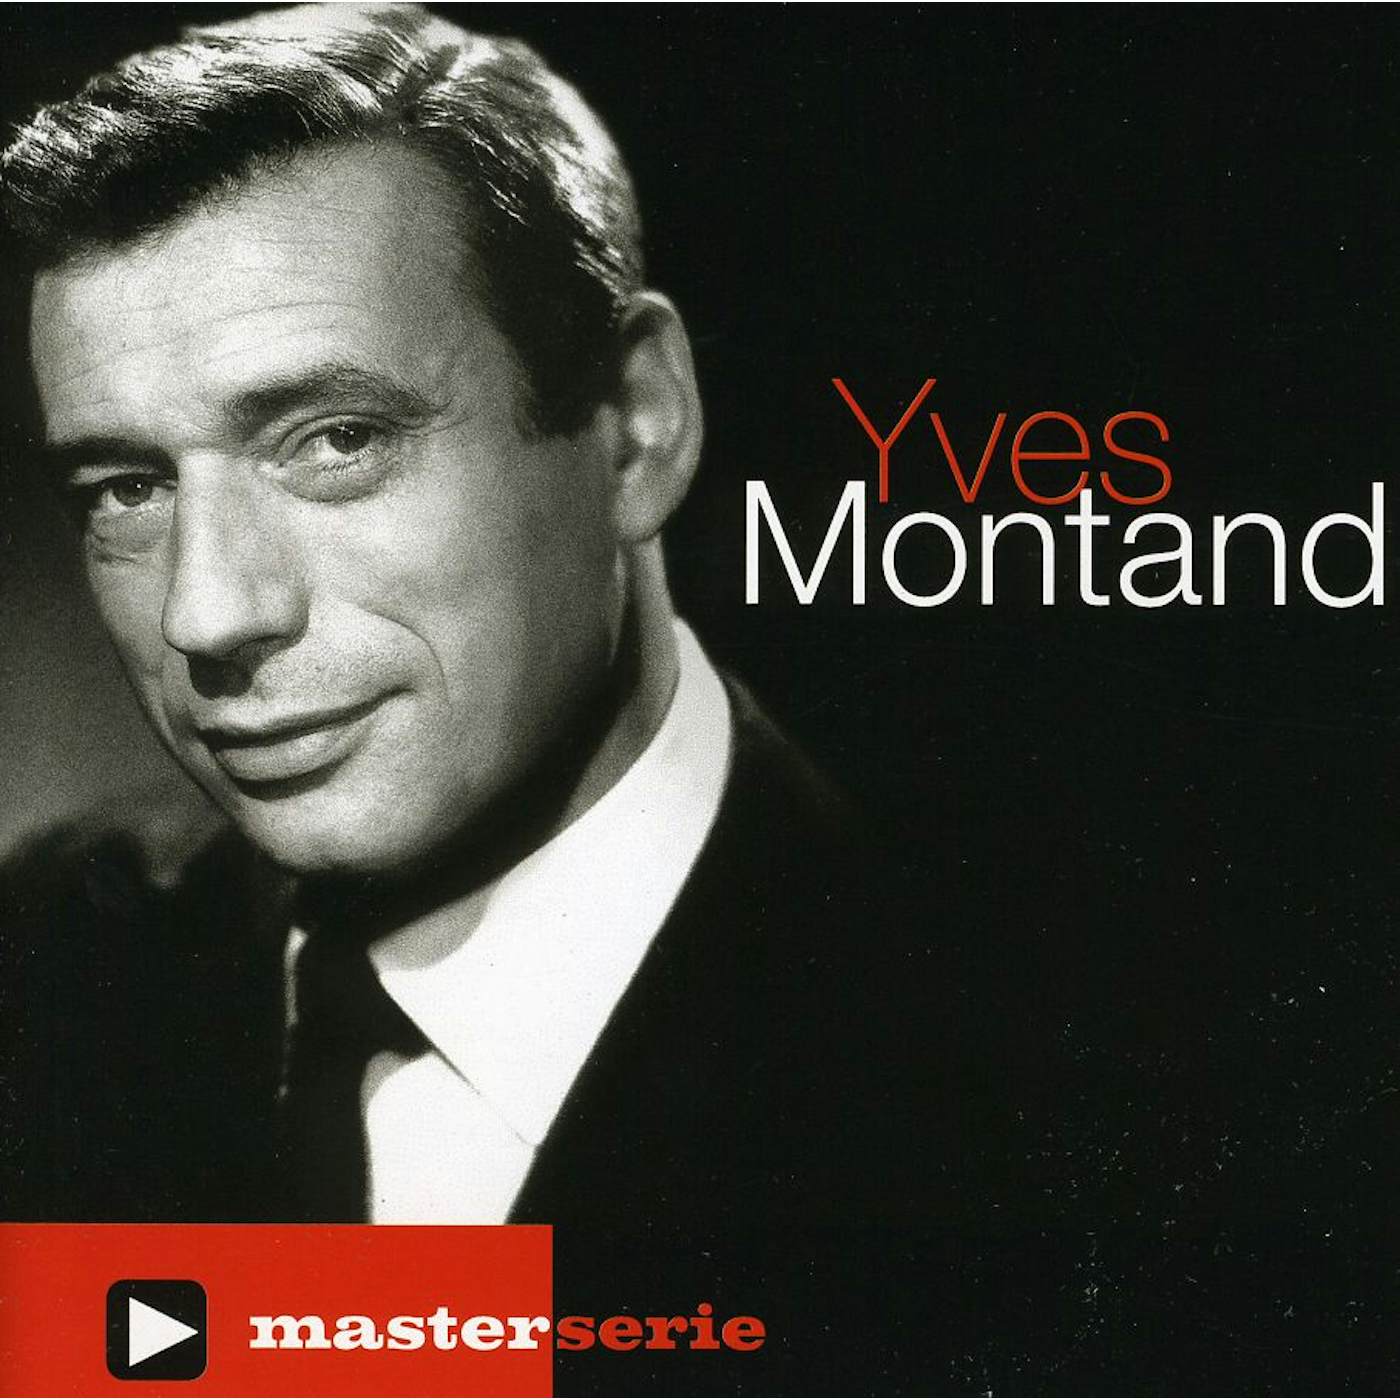 Yves Montand MASTER SERIE CD